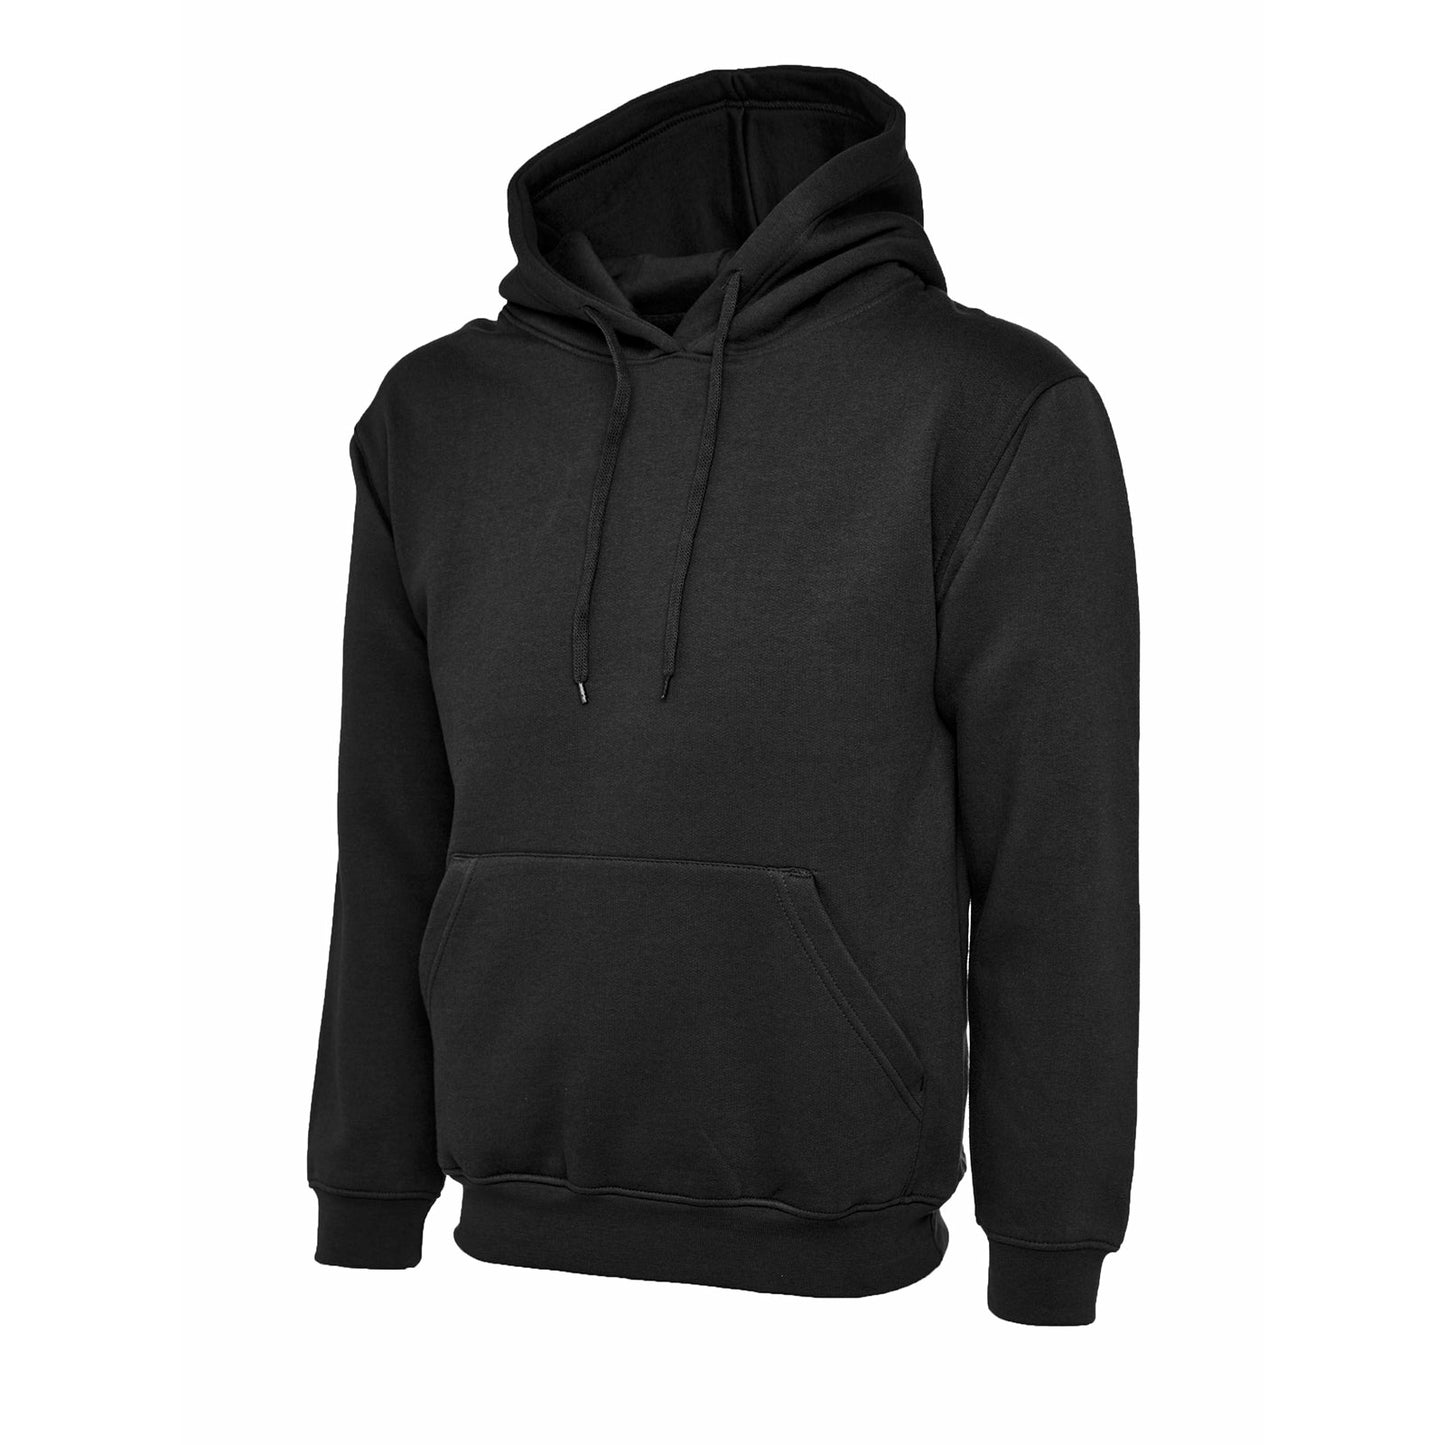 Premium hooded sweatshirt Black